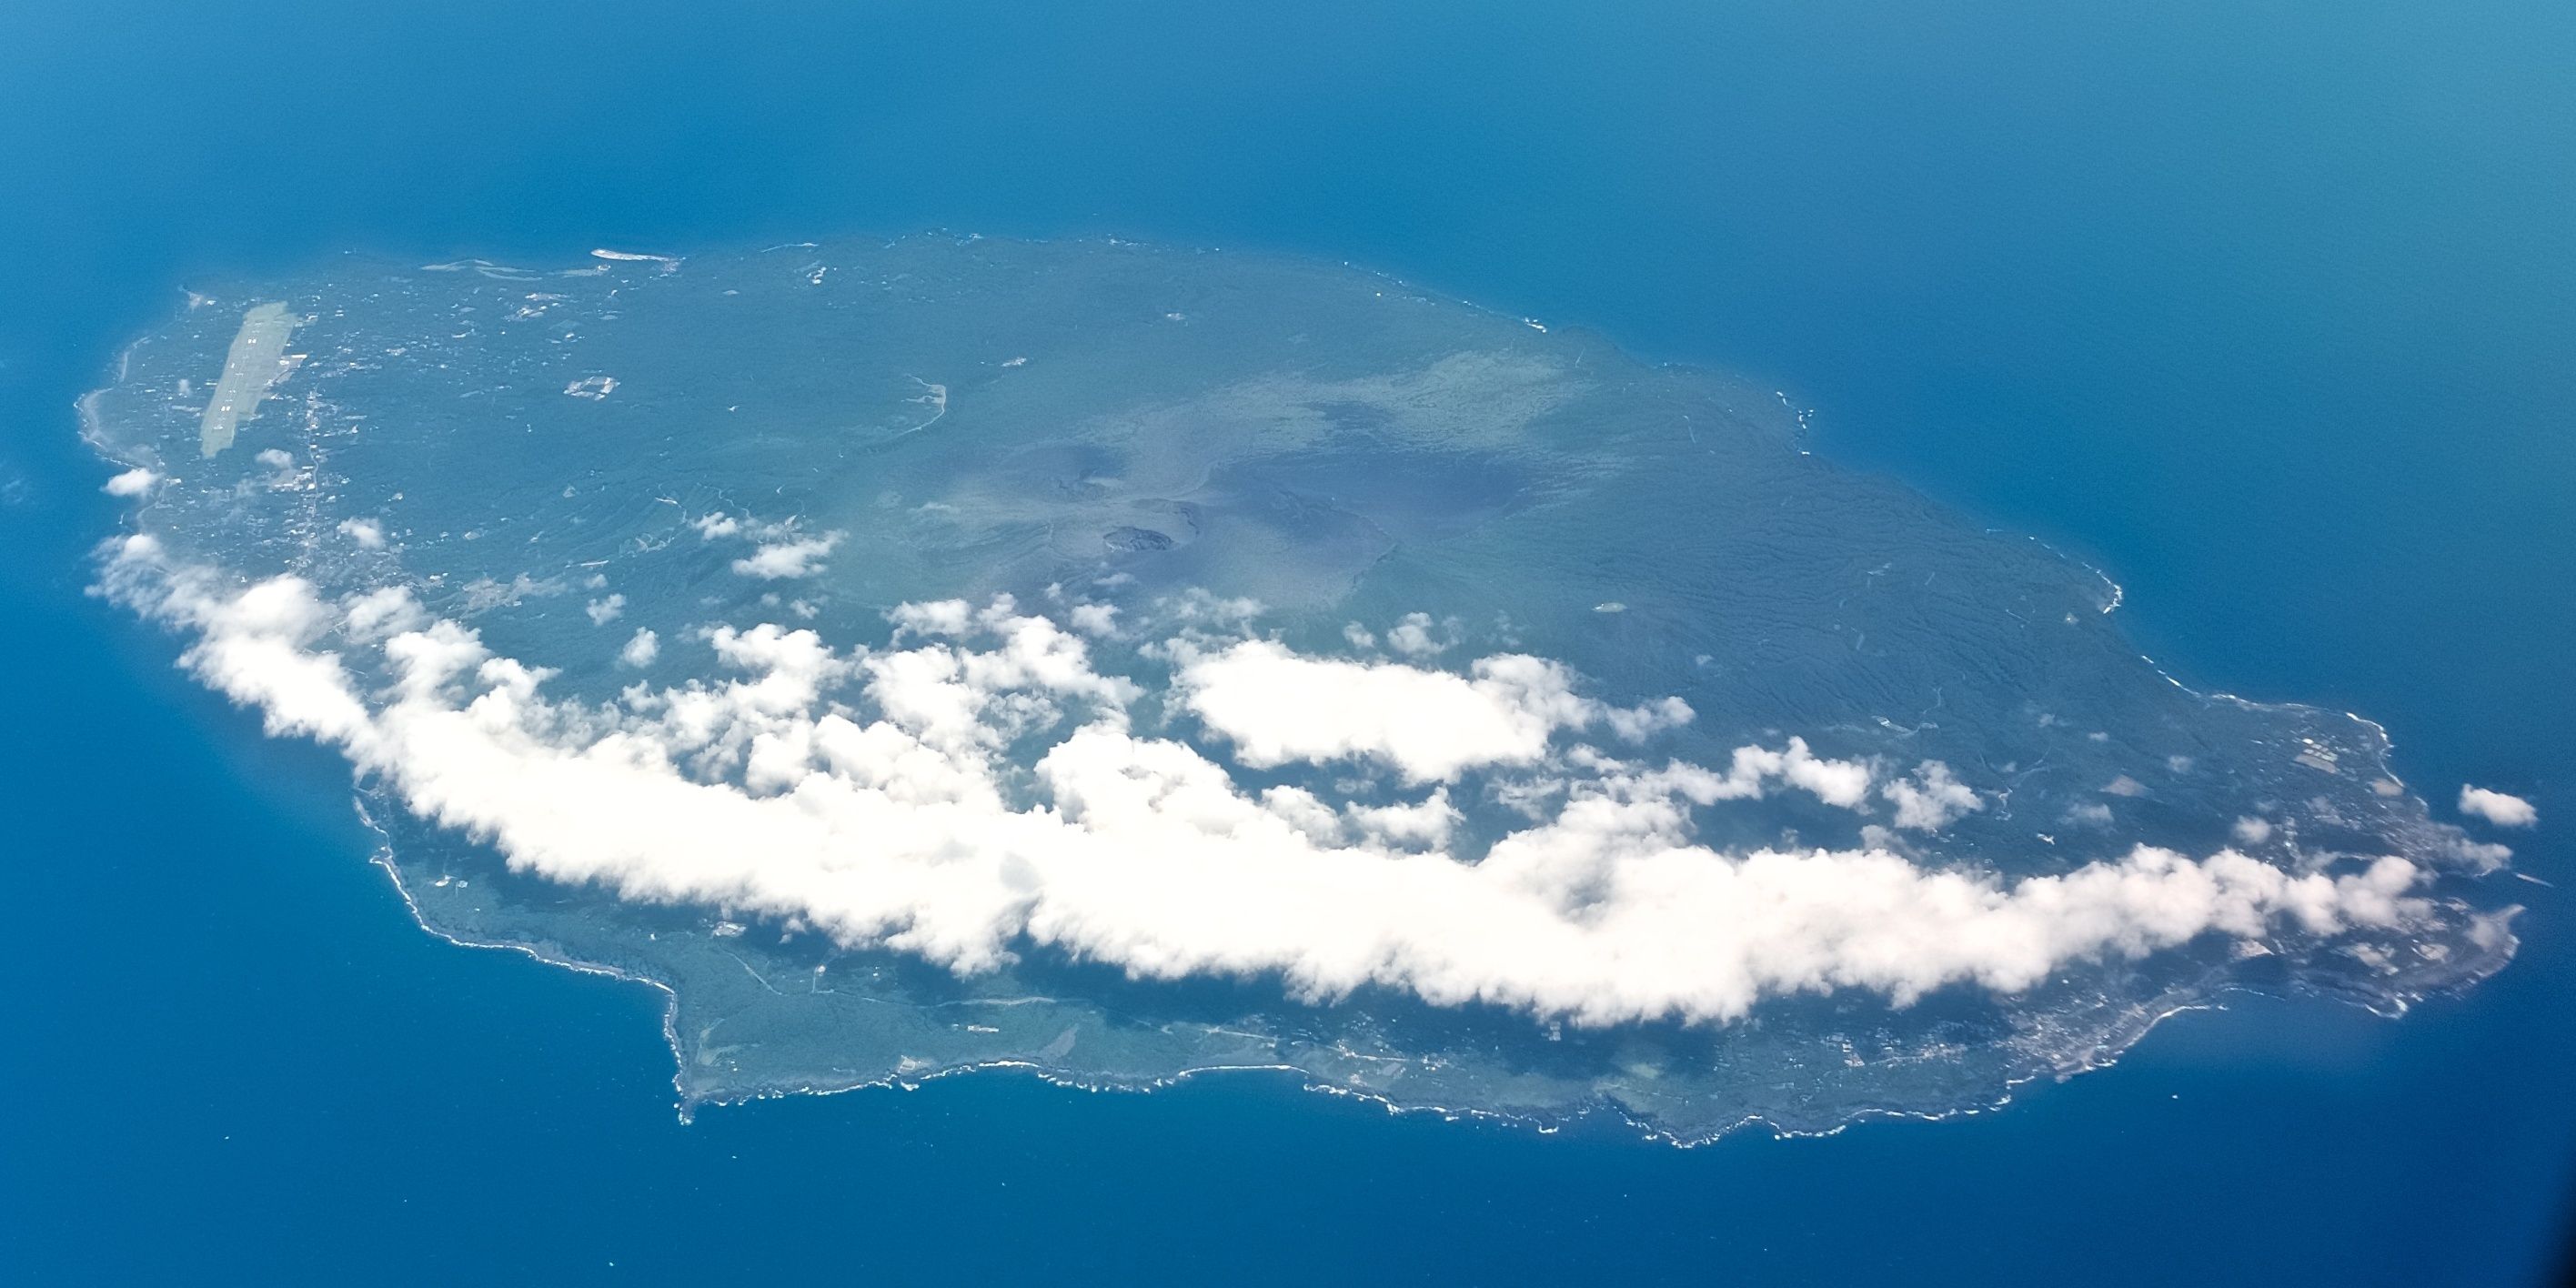 Izu Oshima Island in Japan, which Cinnabar Island in Pokemon is based on